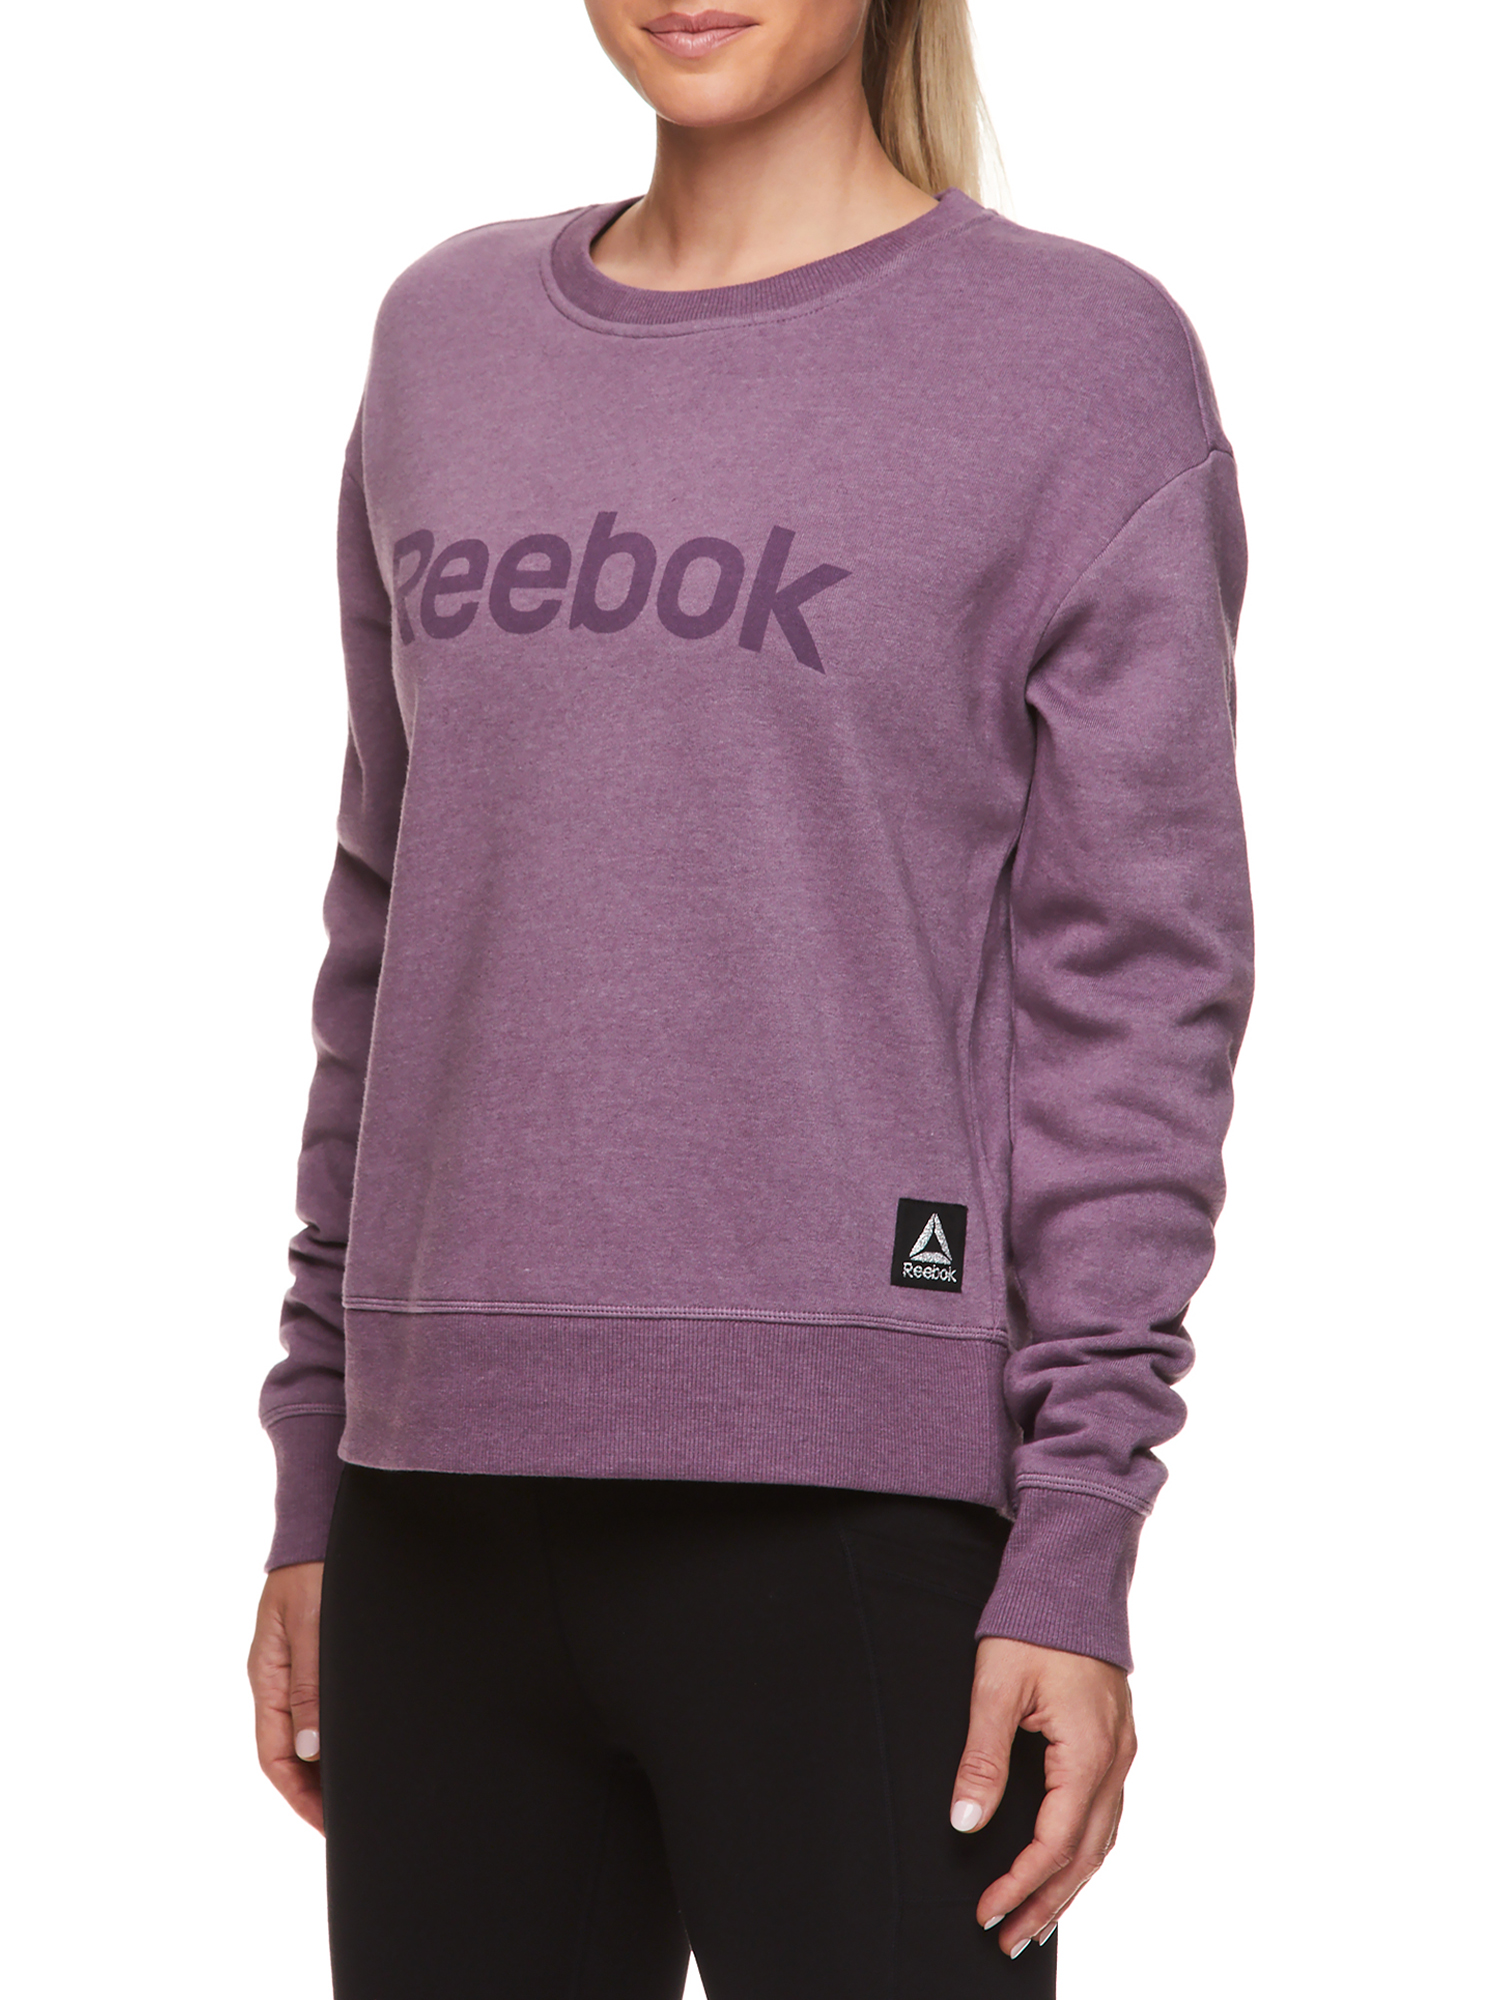 Reebok Womens Cozy Crewneck Sweatshirt with Graphic - image 3 of 4